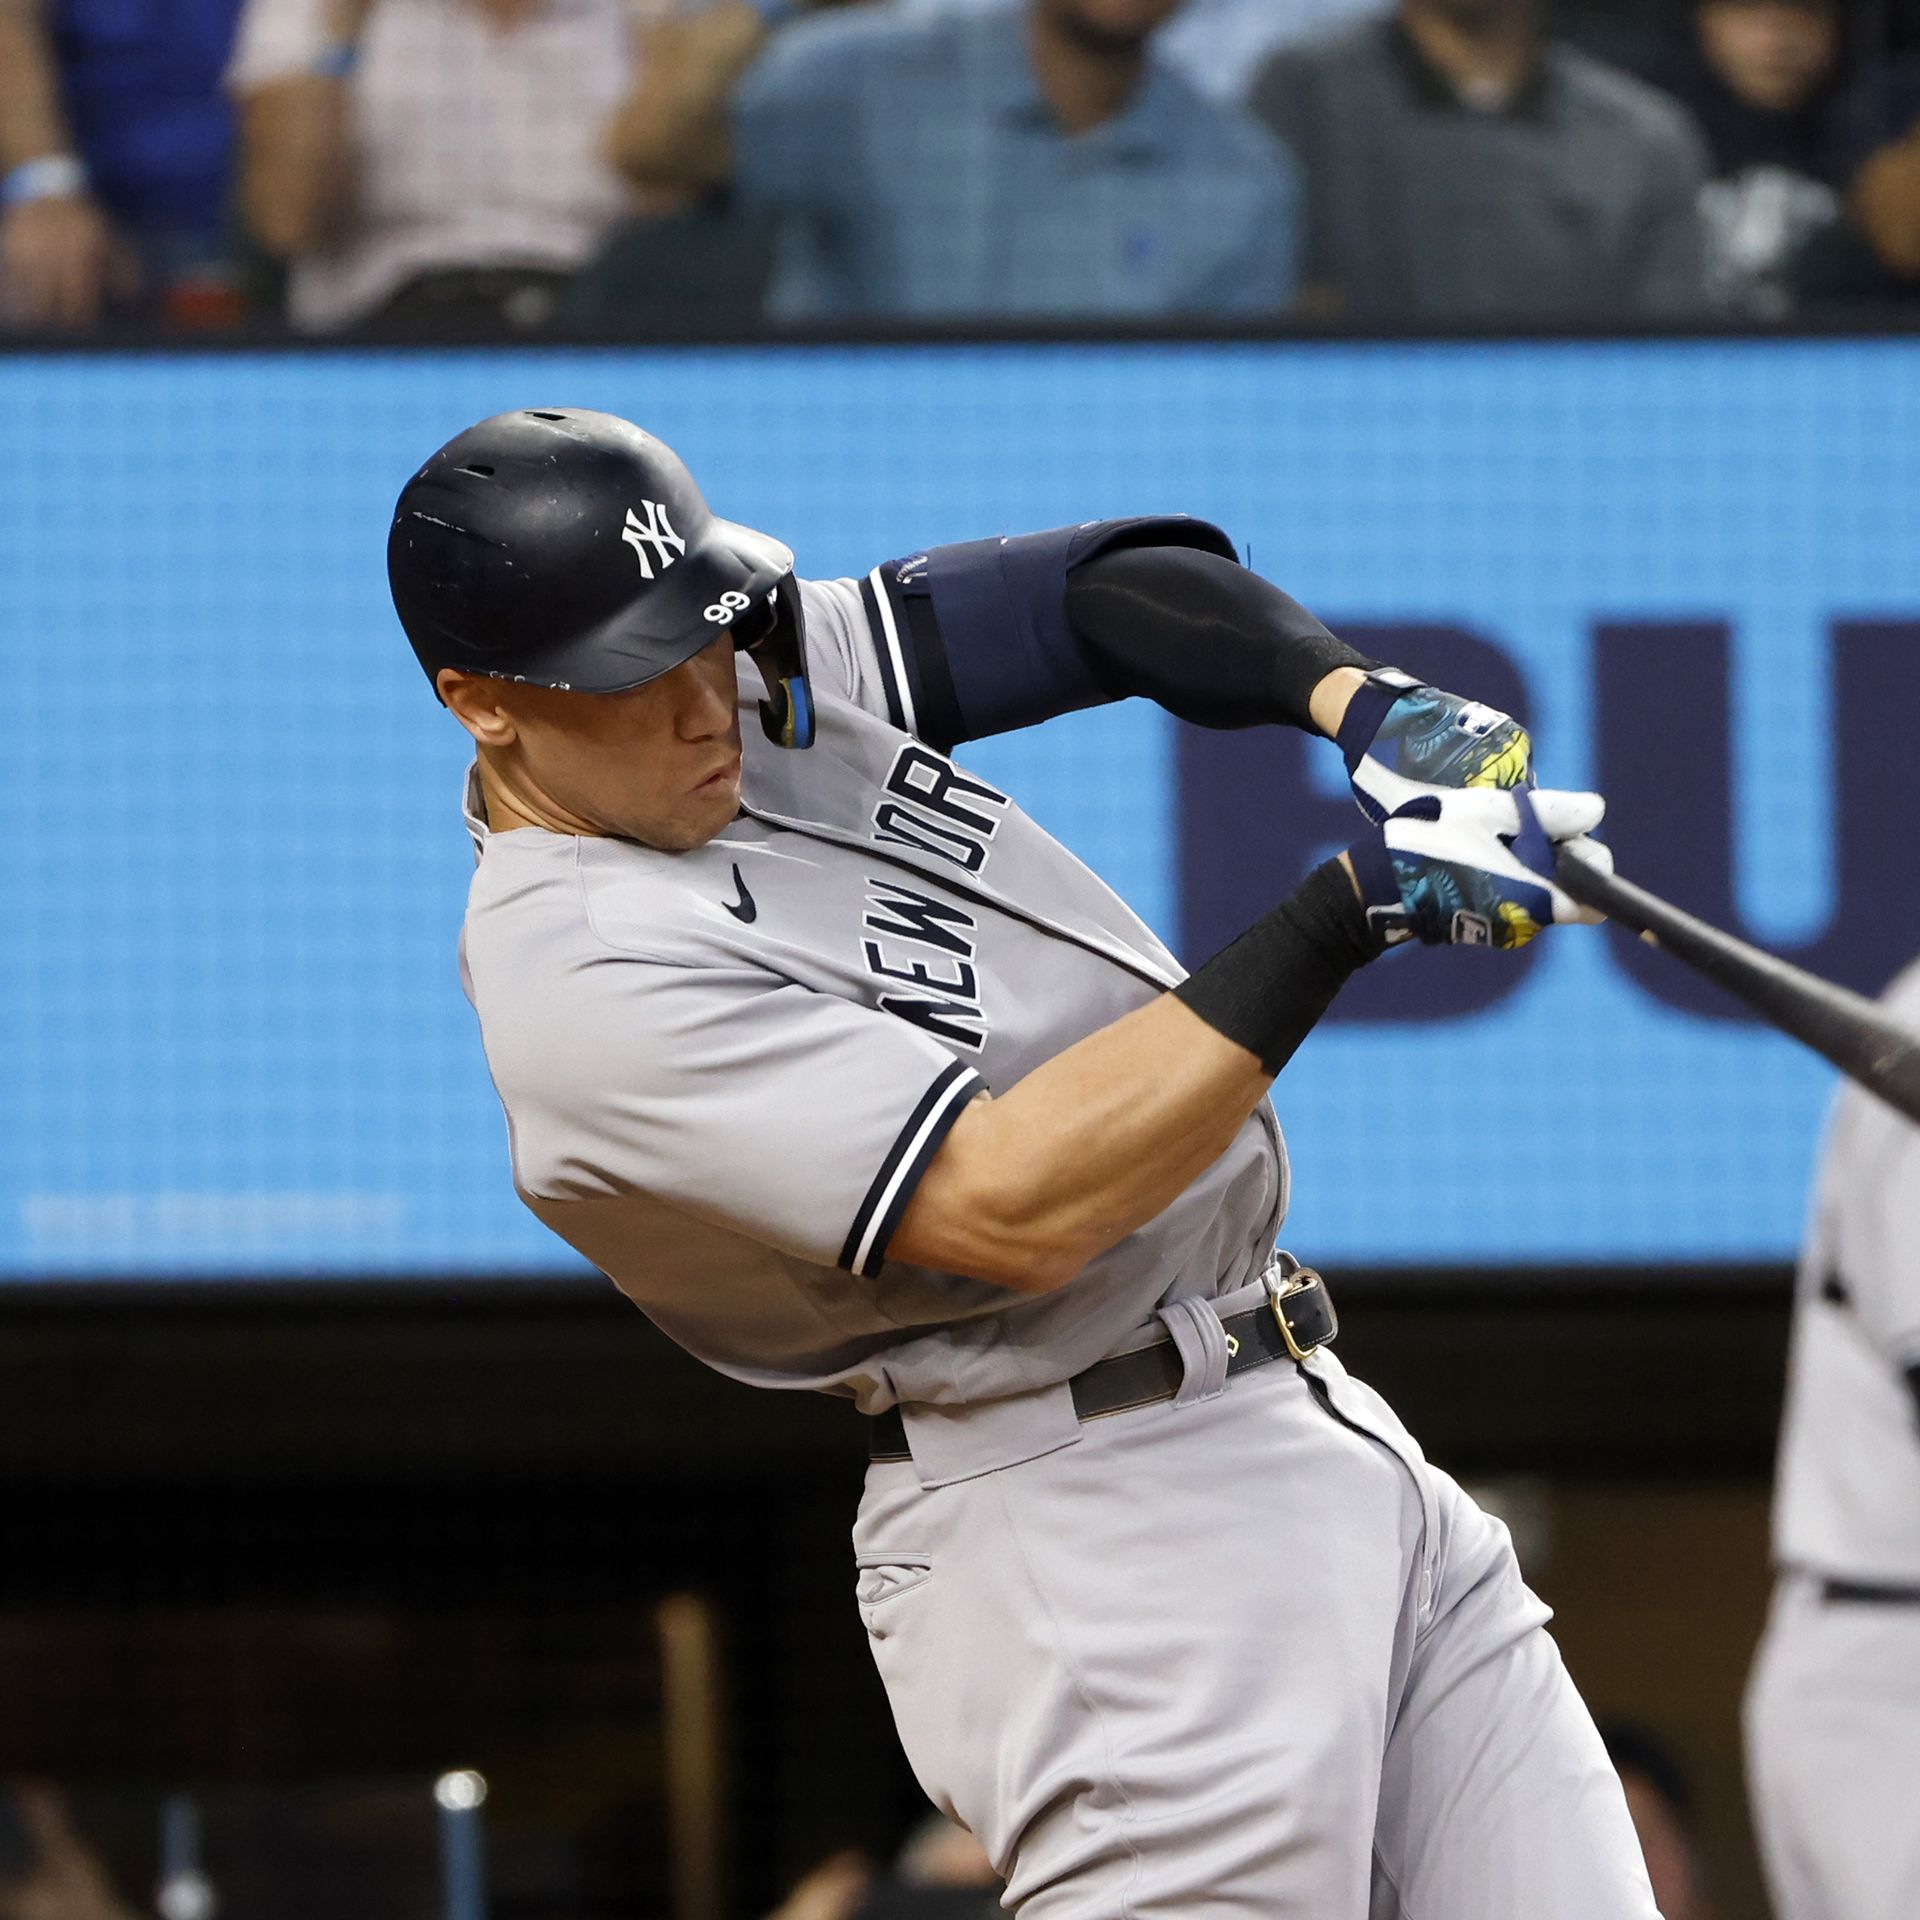 Yankees' Aaron Judge sets new American League home run record